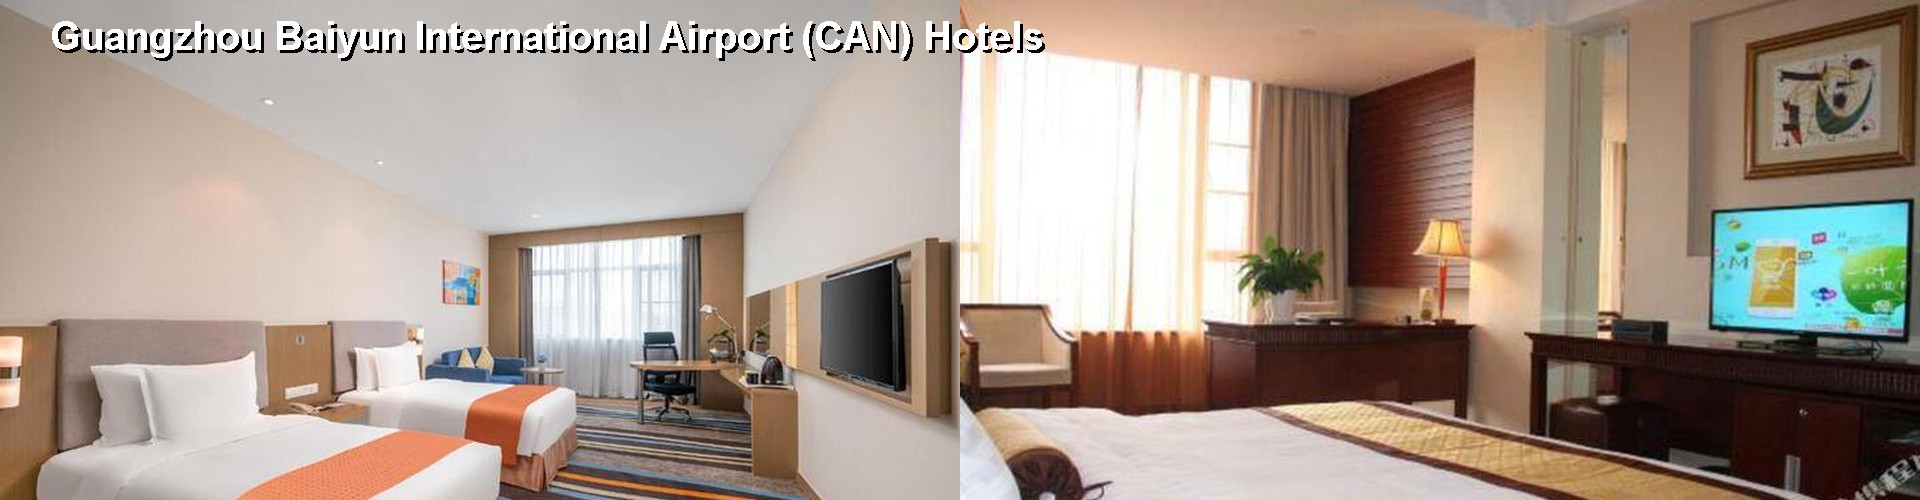 4 Best Hotels near Guangzhou Baiyun International Airport (CAN)